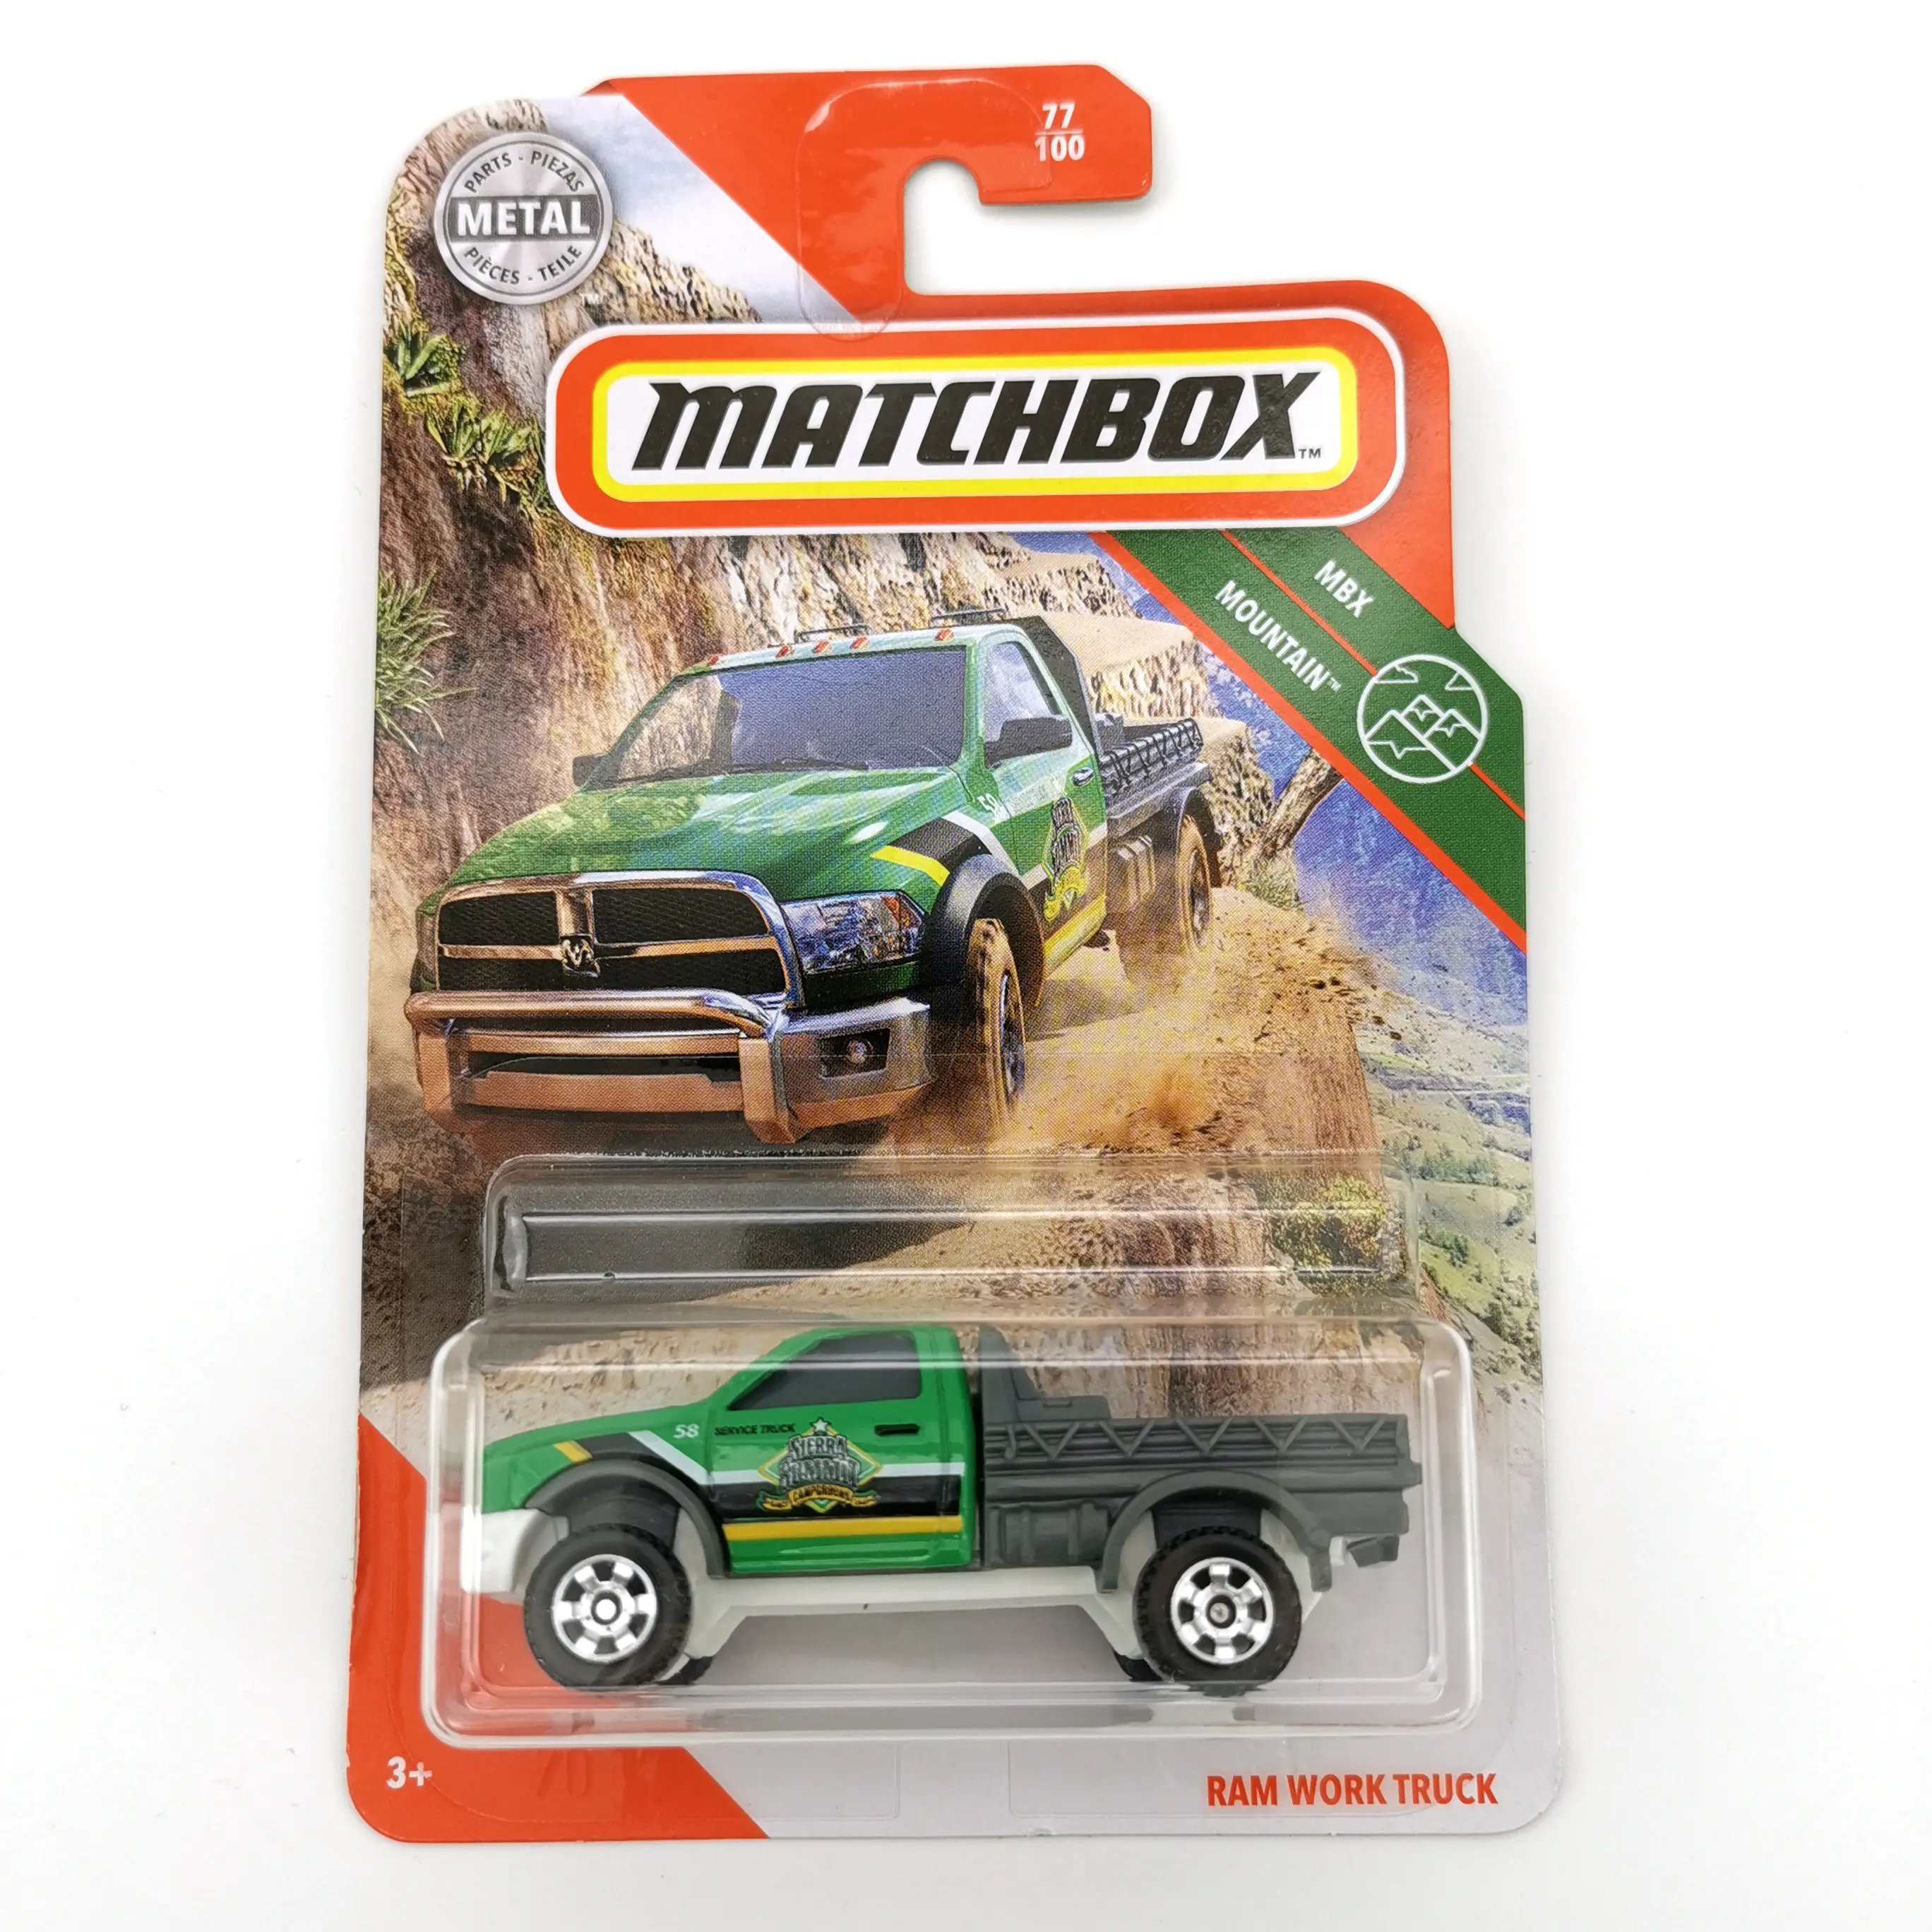 2020 Matchbox Auto 1:64 Sportwagen Ram Werk Truck Metalen Materiaal Body Ras Auto Collectie Legering Auto Gift AliExpress